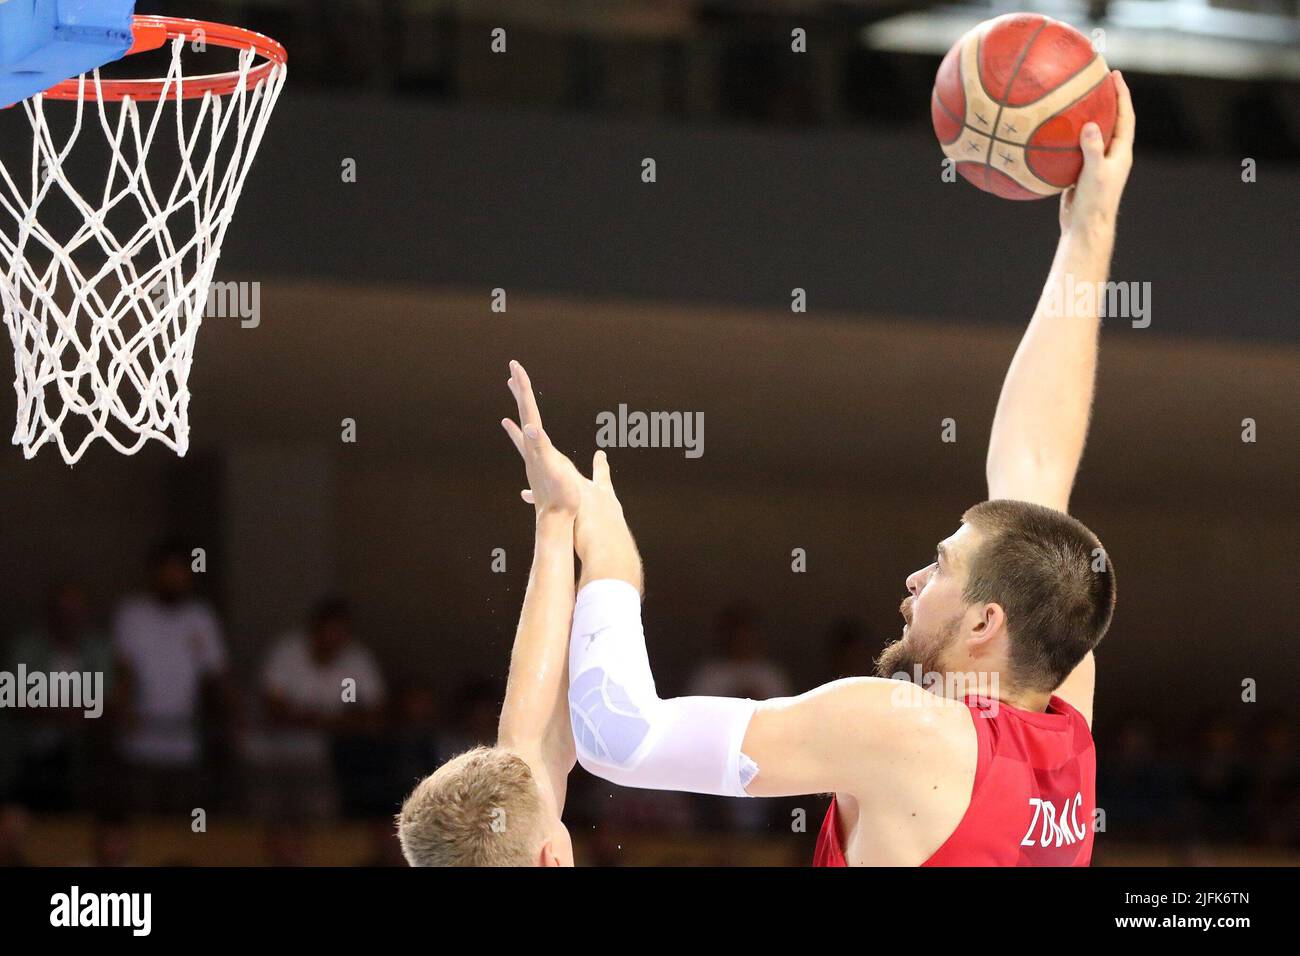 (220704) -- RIJEKA, July 4, 2022 (Xinhua) -- Ivica Zubac (R) of Croatia shoots the ball during the FIBA Basketball World Cup 2023 Qualifying game between Croatia and Finland in Rijeka, Croatia, on July 3, 2022. (Goran Kovacic/PIXSELL via Xinhua) Stock Photo